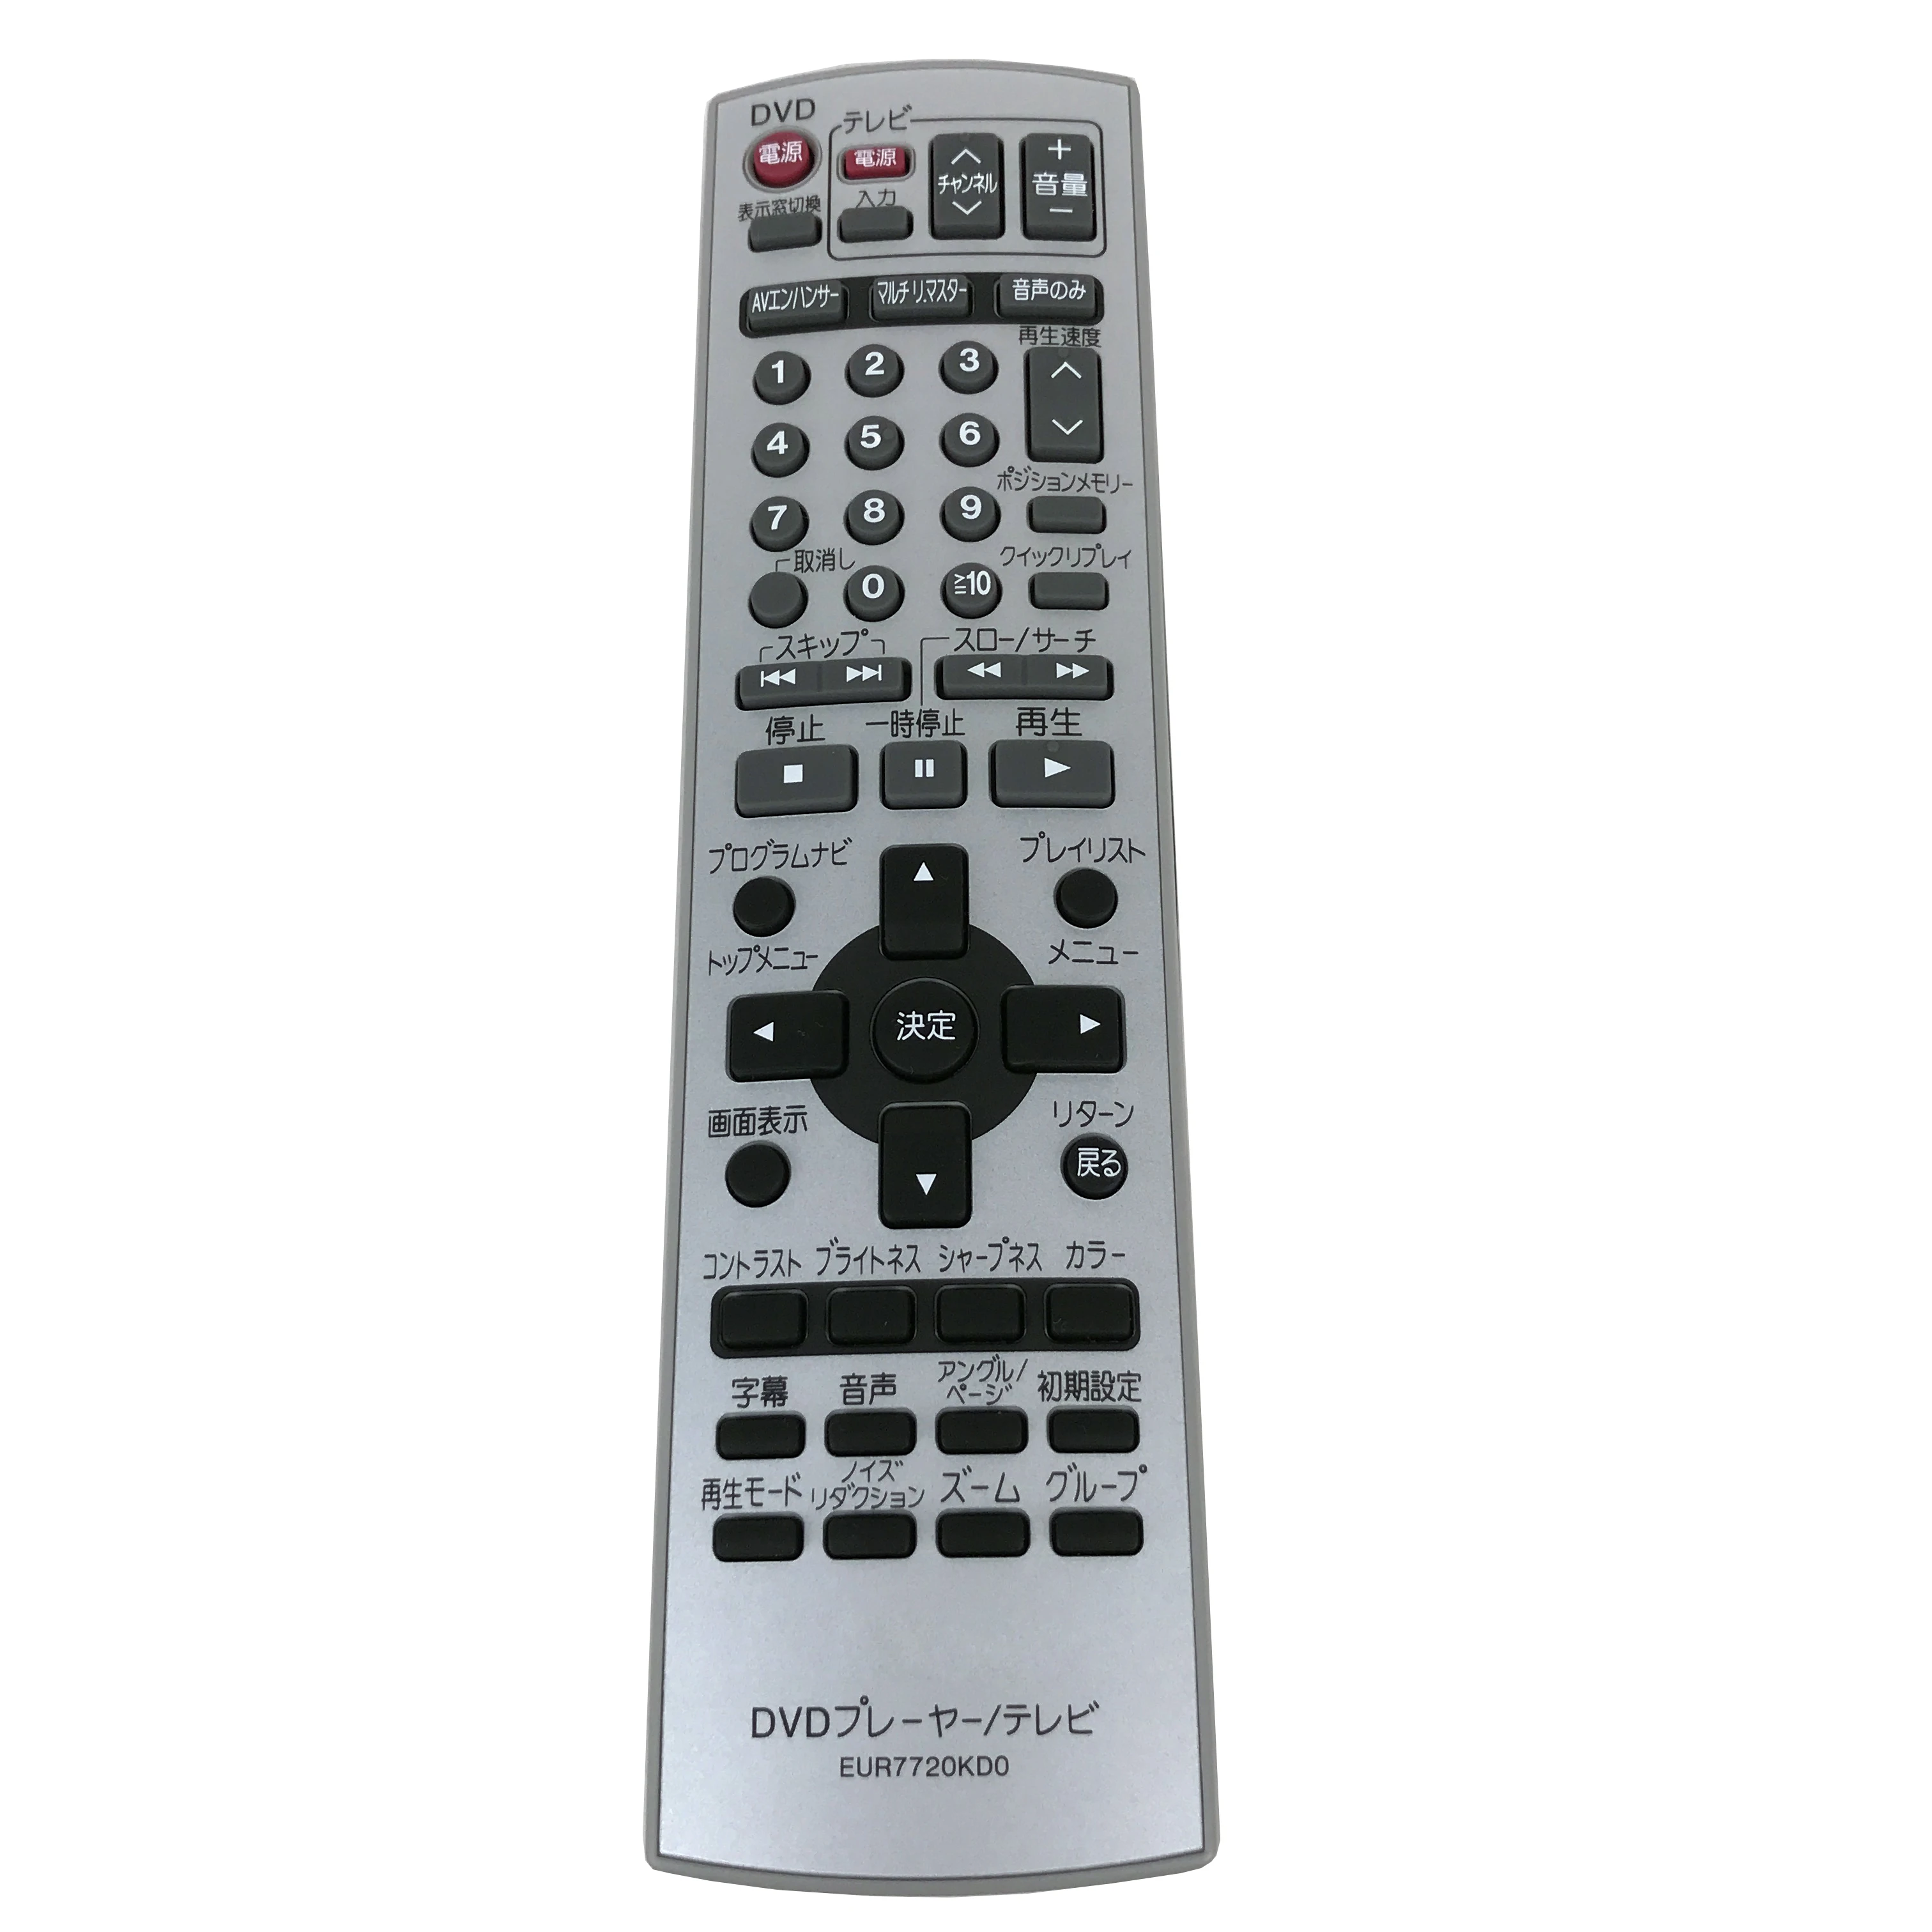 

New Original EUR7720KD0 For Panasonic Fit for DVD remote control DVD-S97 dvd-s50 DVDS97 Japanese Fernbedienung